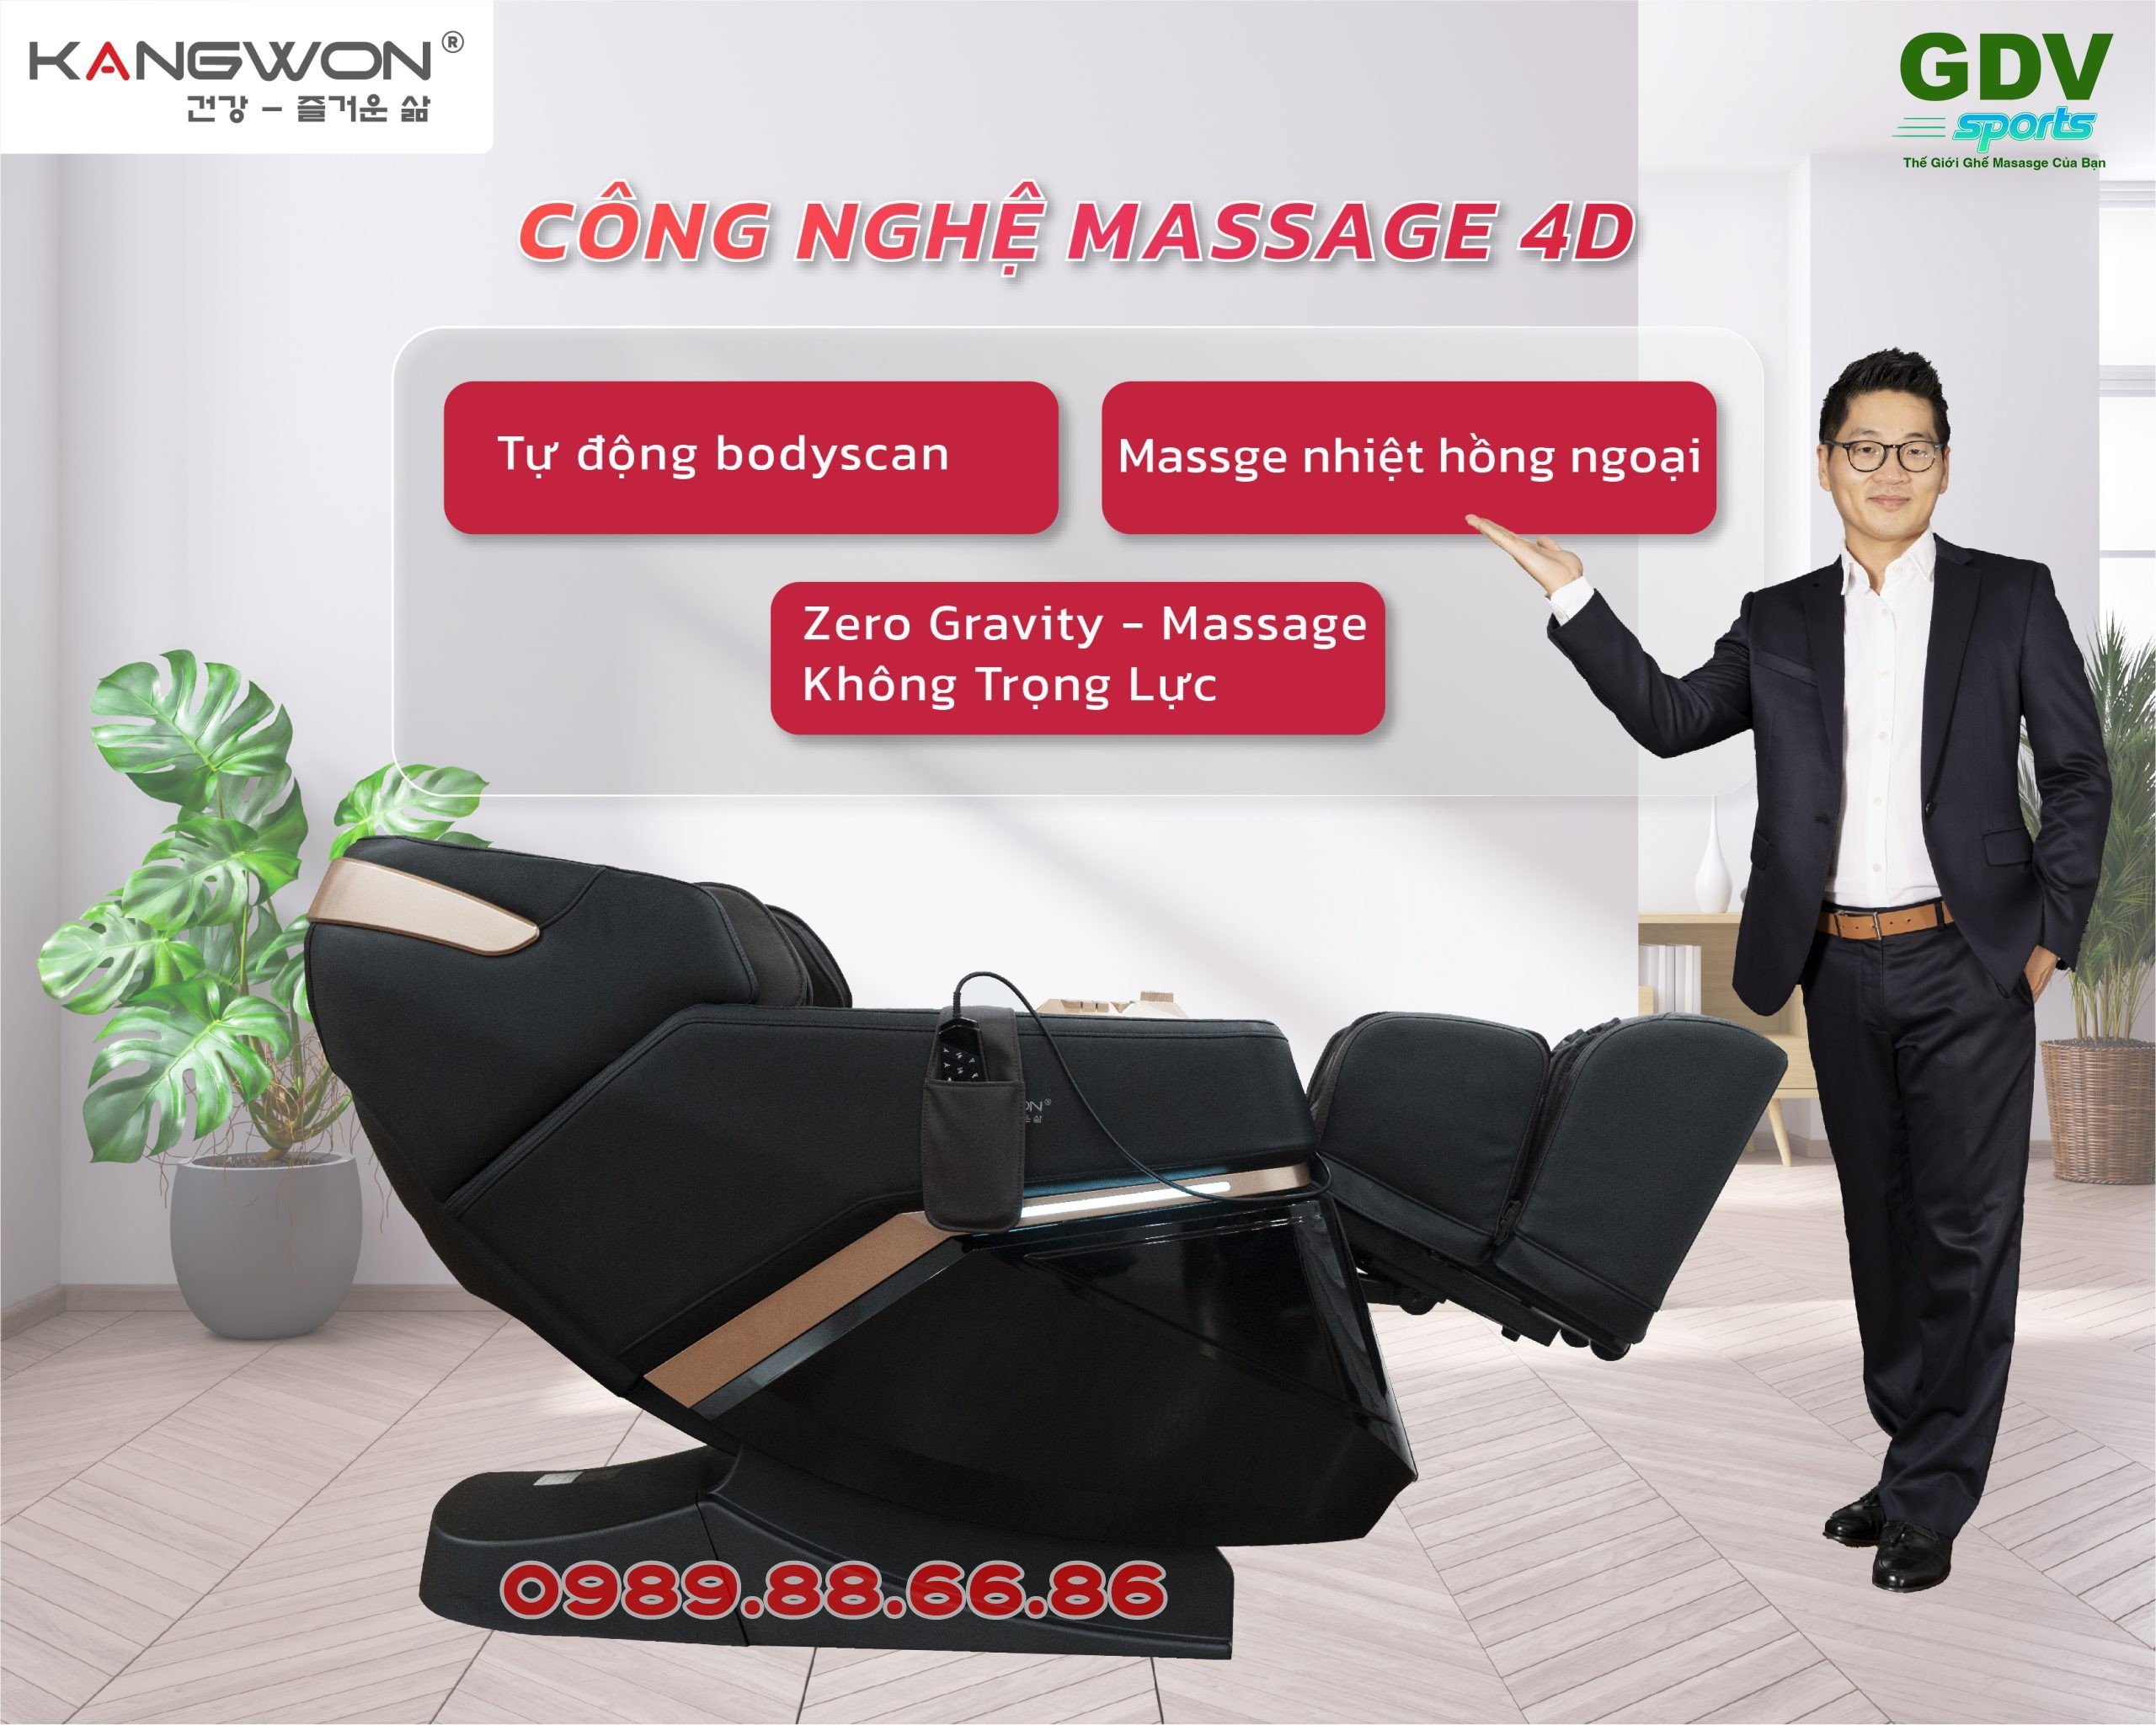 Ghe Massage Kangwon Lx 580 6